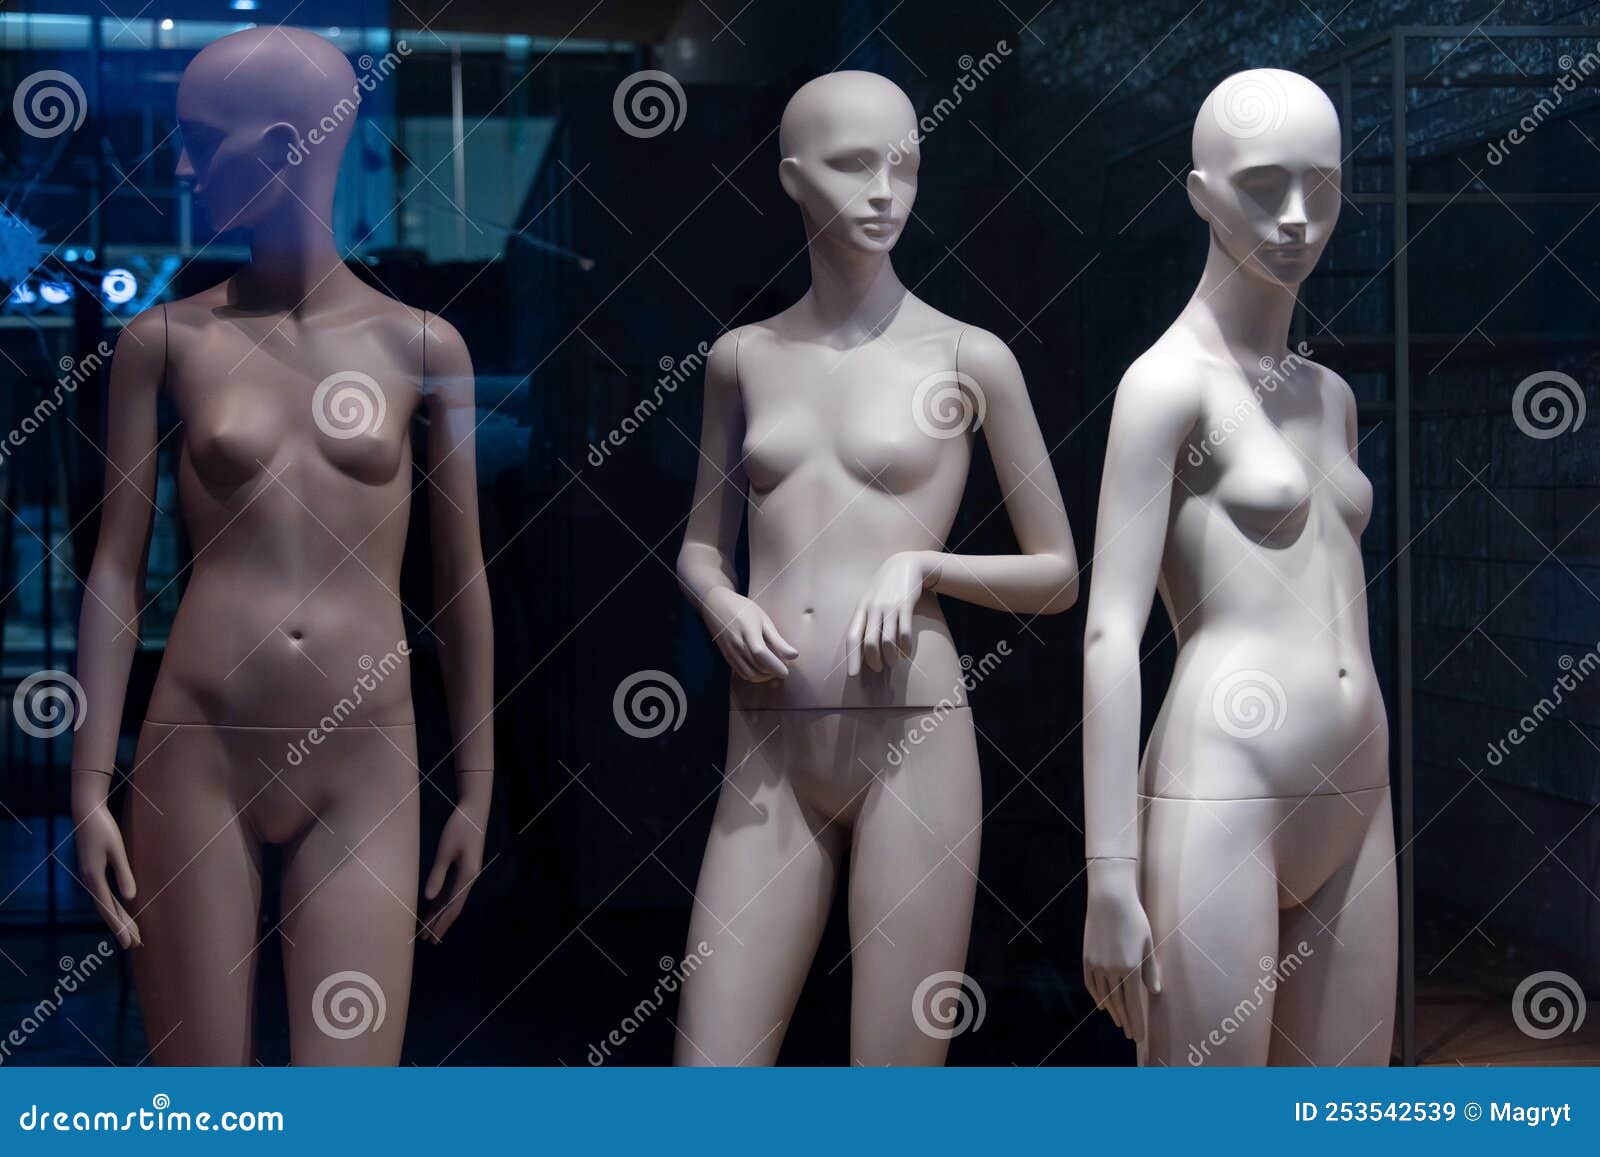 Мода голых девушек (70 фото)